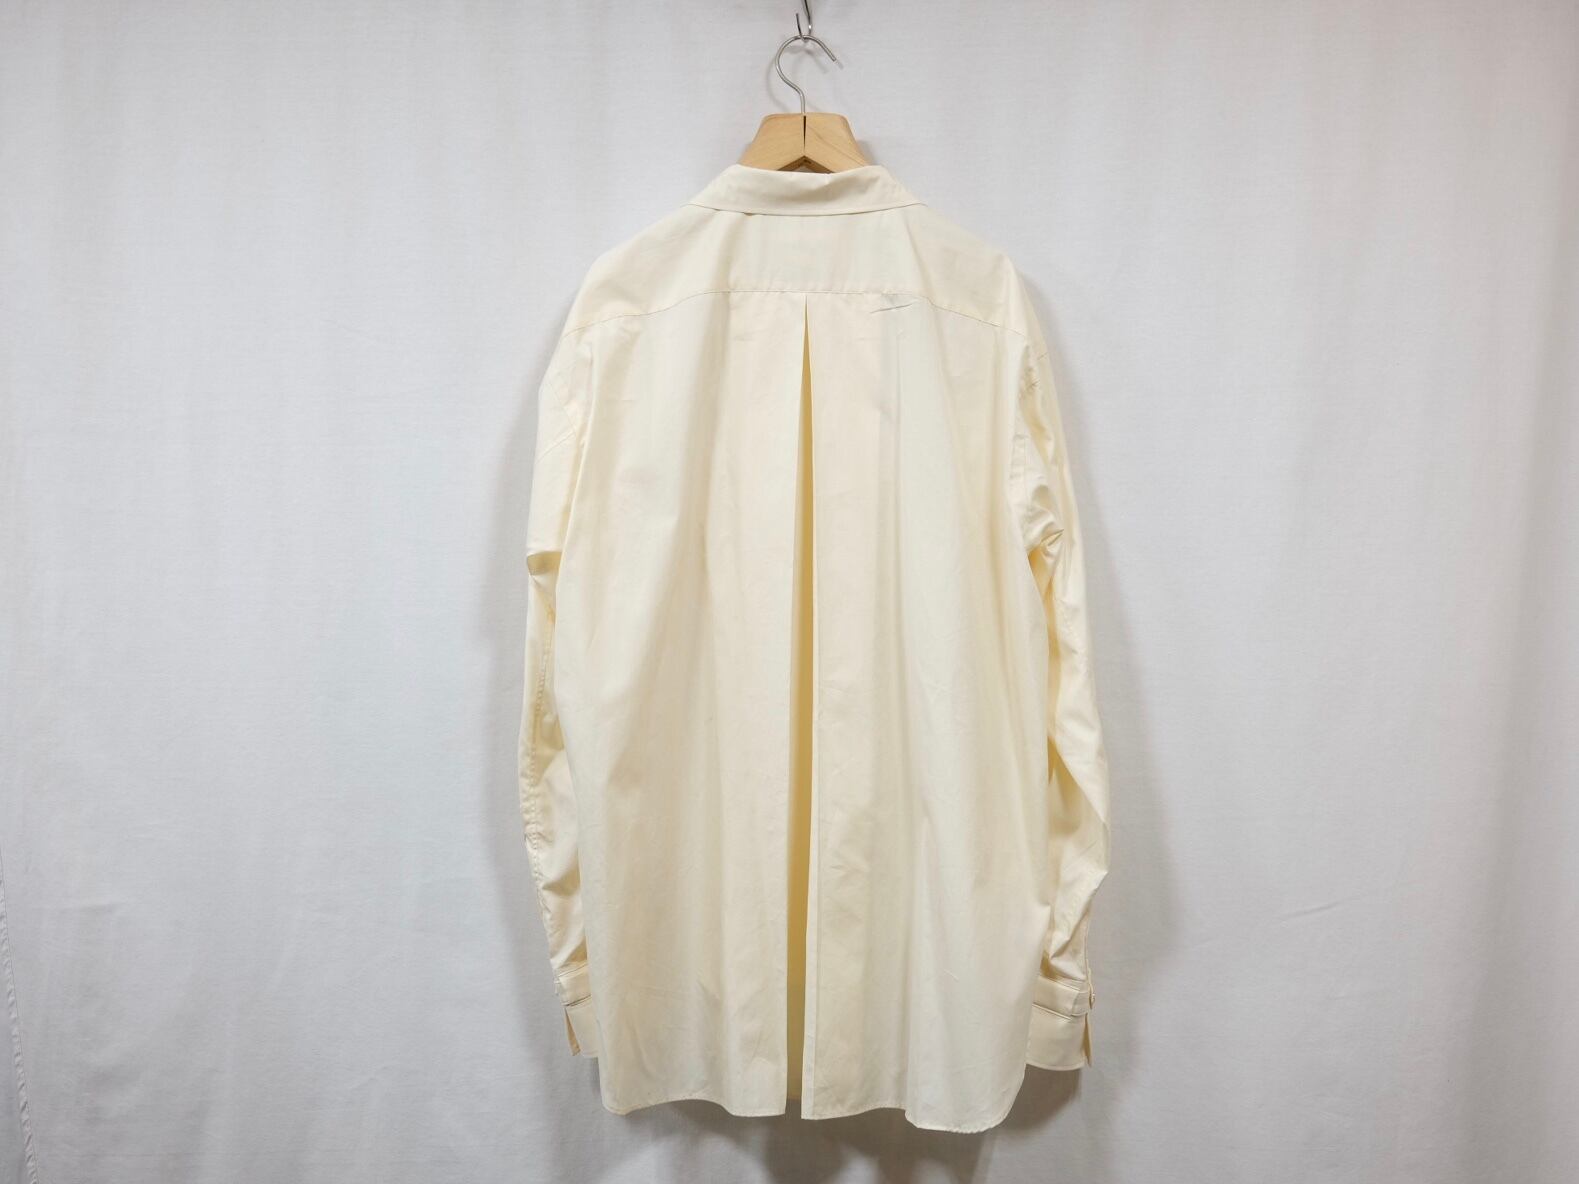 JUN MIKAMI “オープンカラーシャツ” Cream | Lapel online store powered by BASE